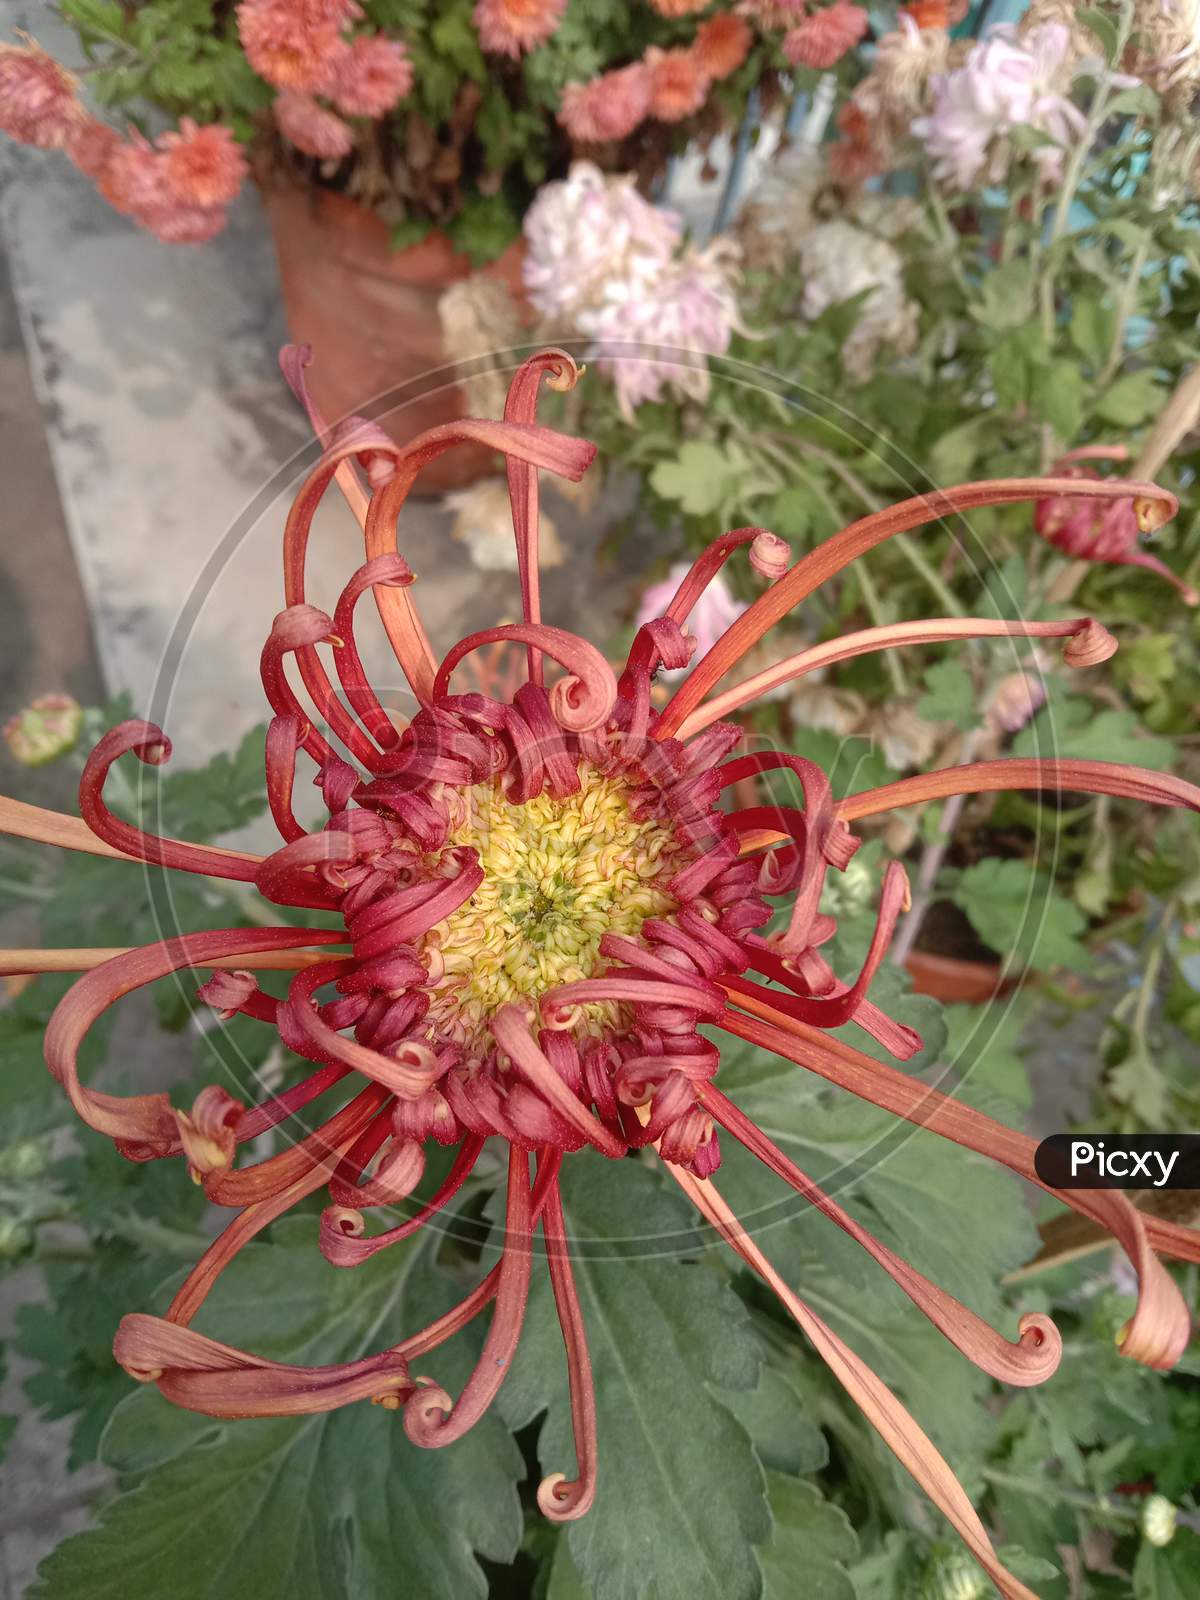 Growing Chrysanthemum flower